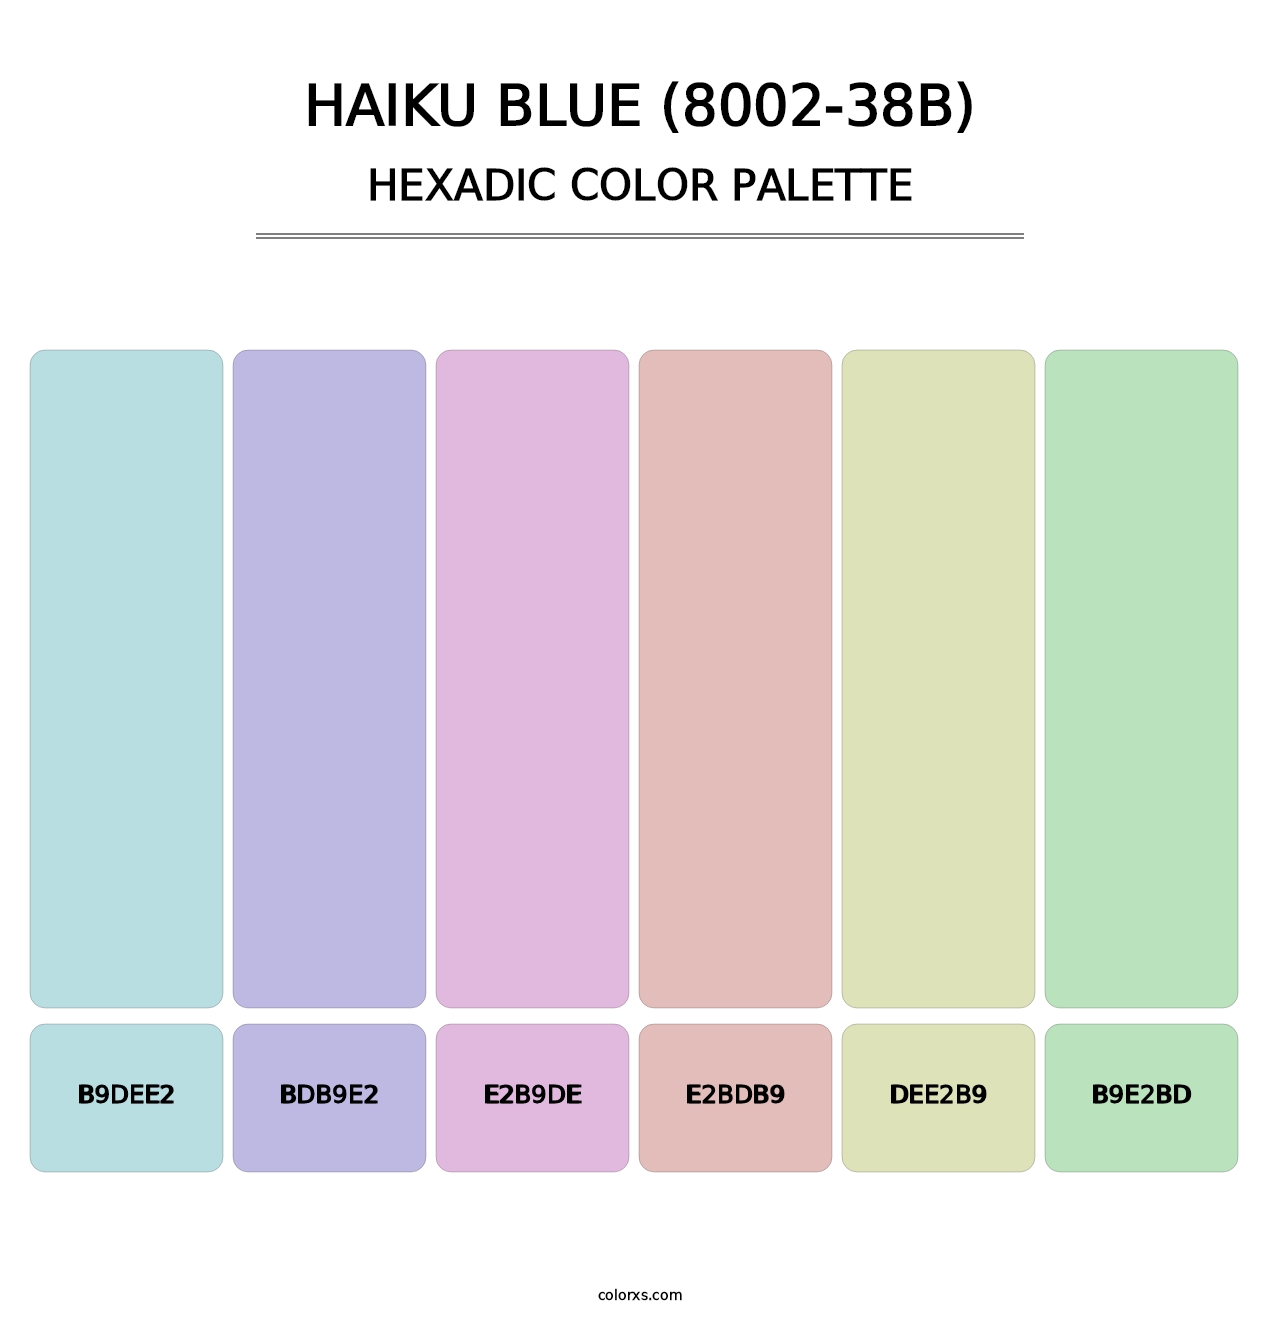 Haiku Blue (8002-38B) - Hexadic Color Palette